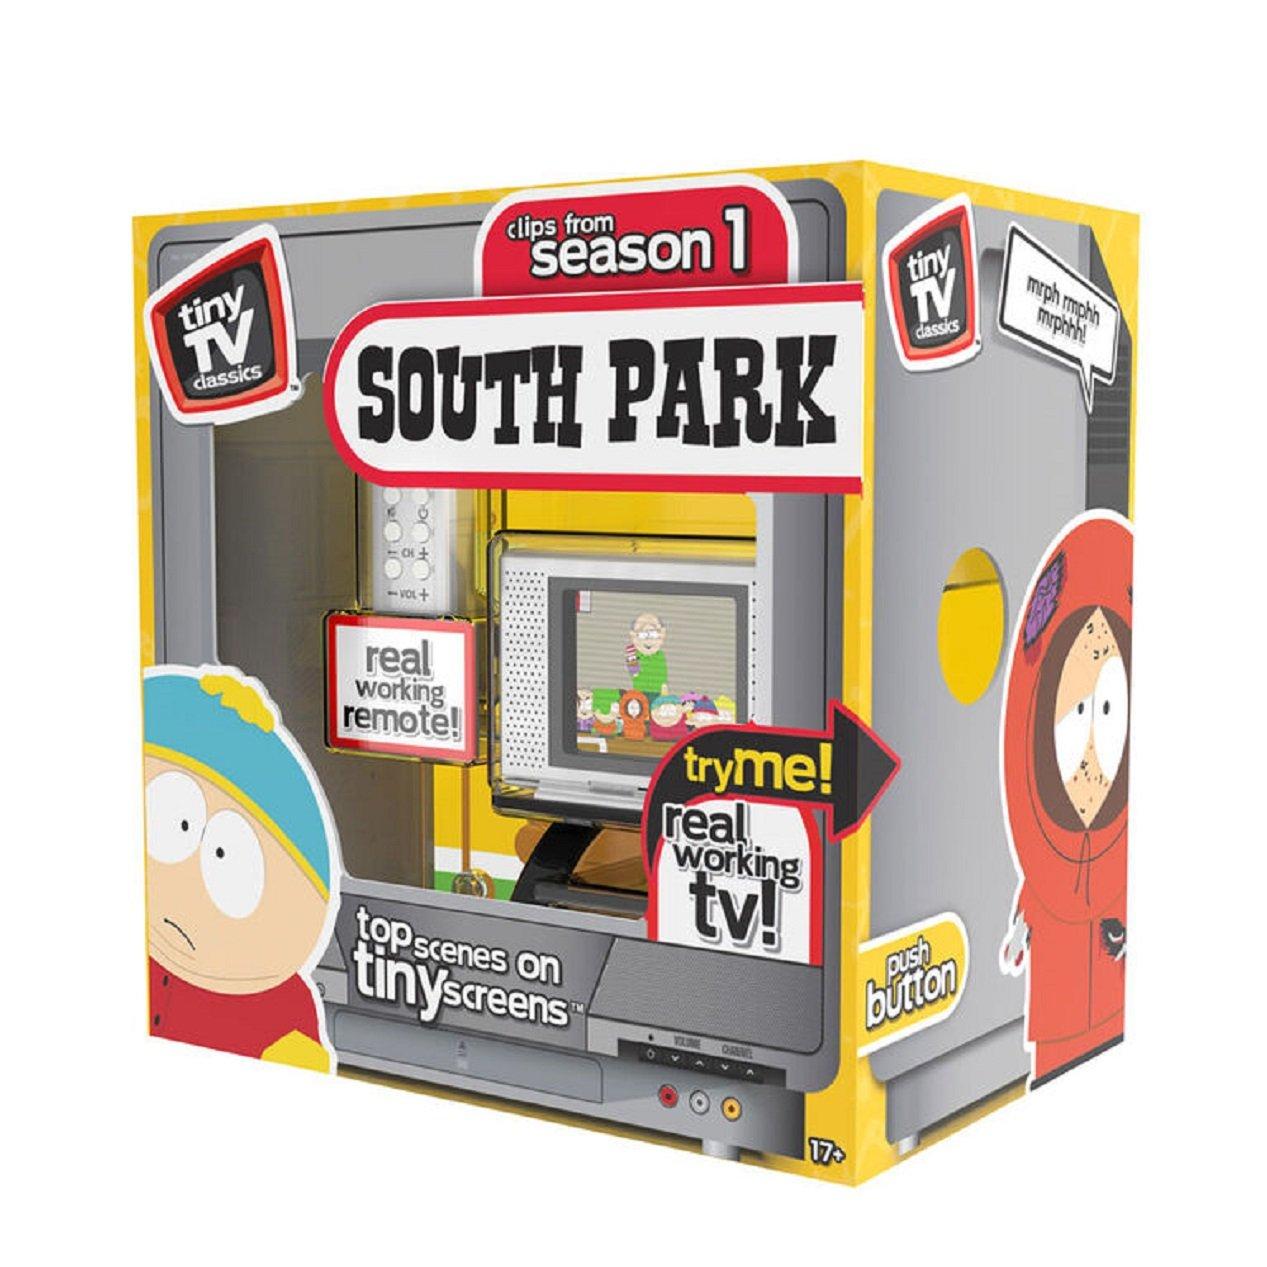 Basic Fun! Tiny TV Classics - South Park | GameStop